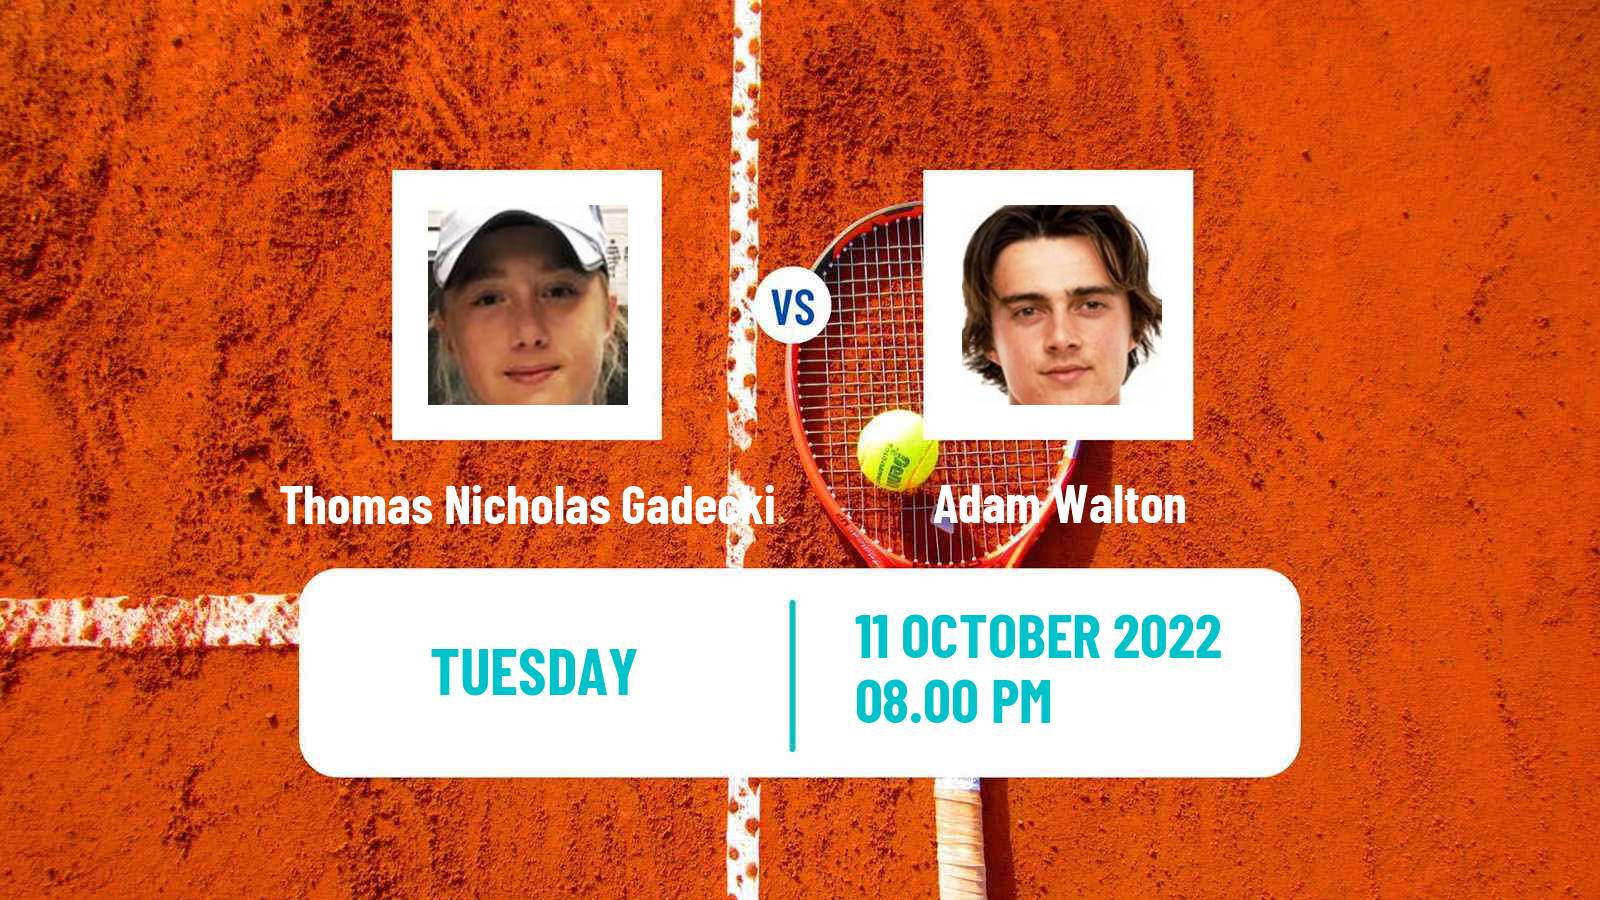 Tennis ITF Tournaments Thomas Nicholas Gadecki - Adam Walton